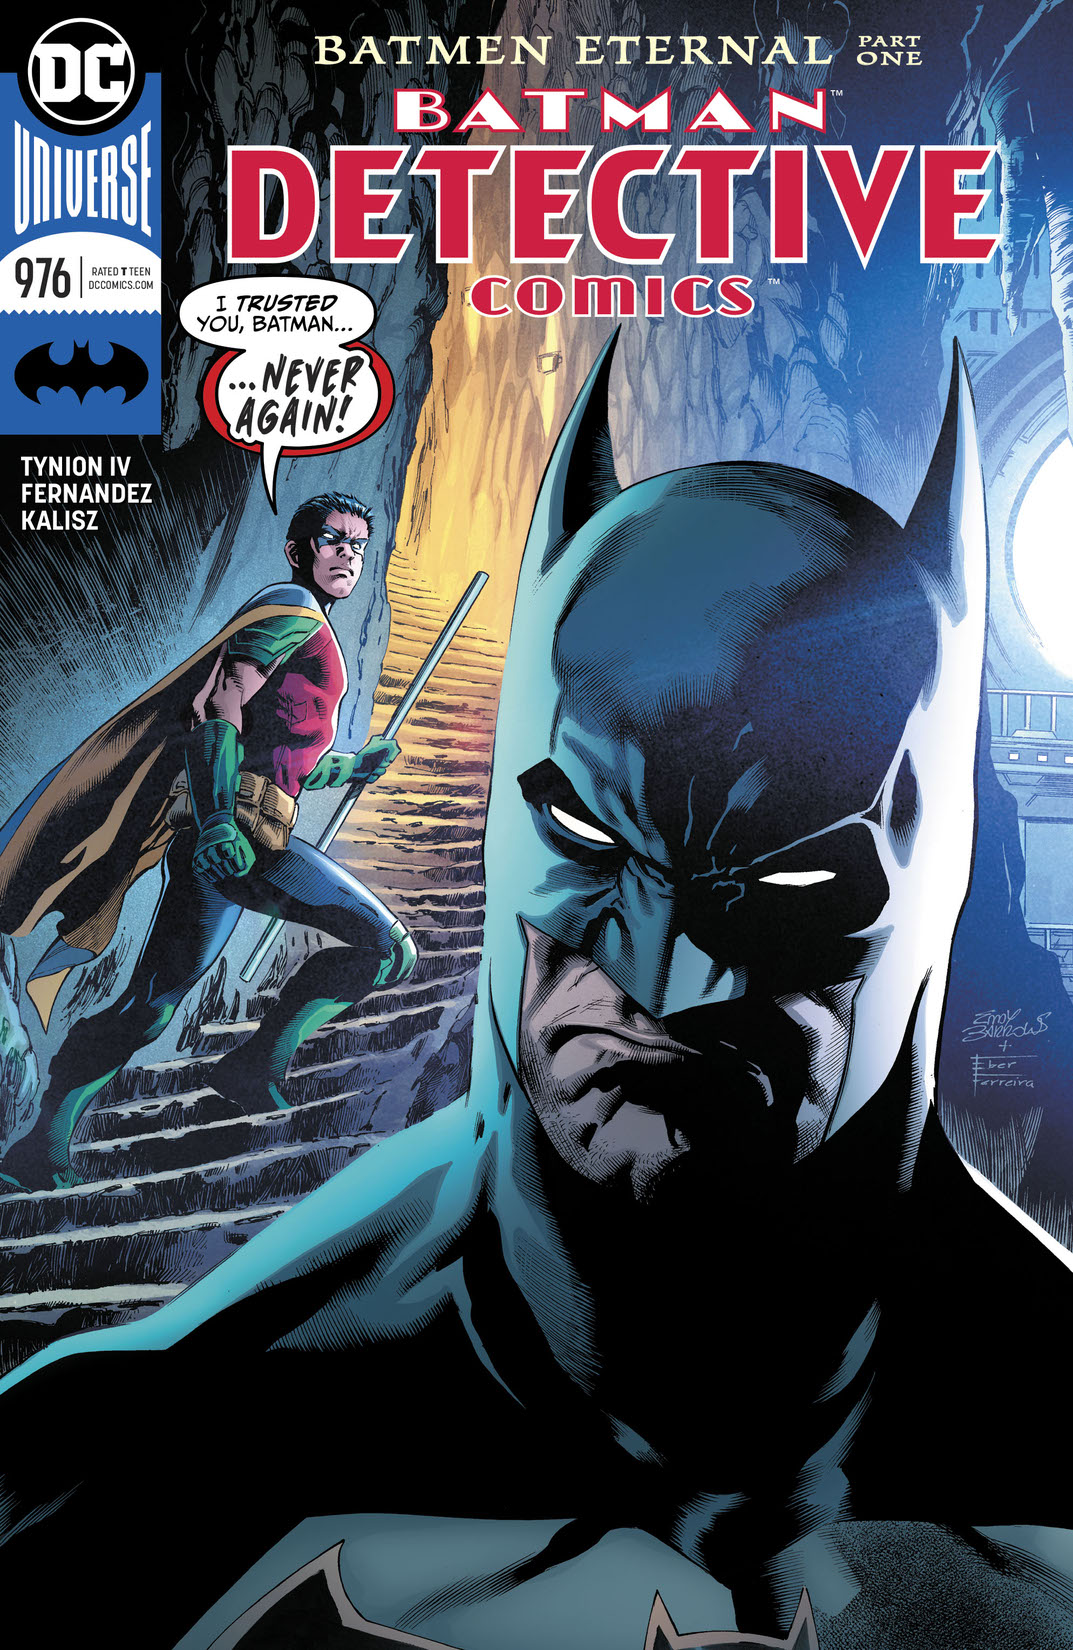 Detective Comics (2016-) #976 preview images